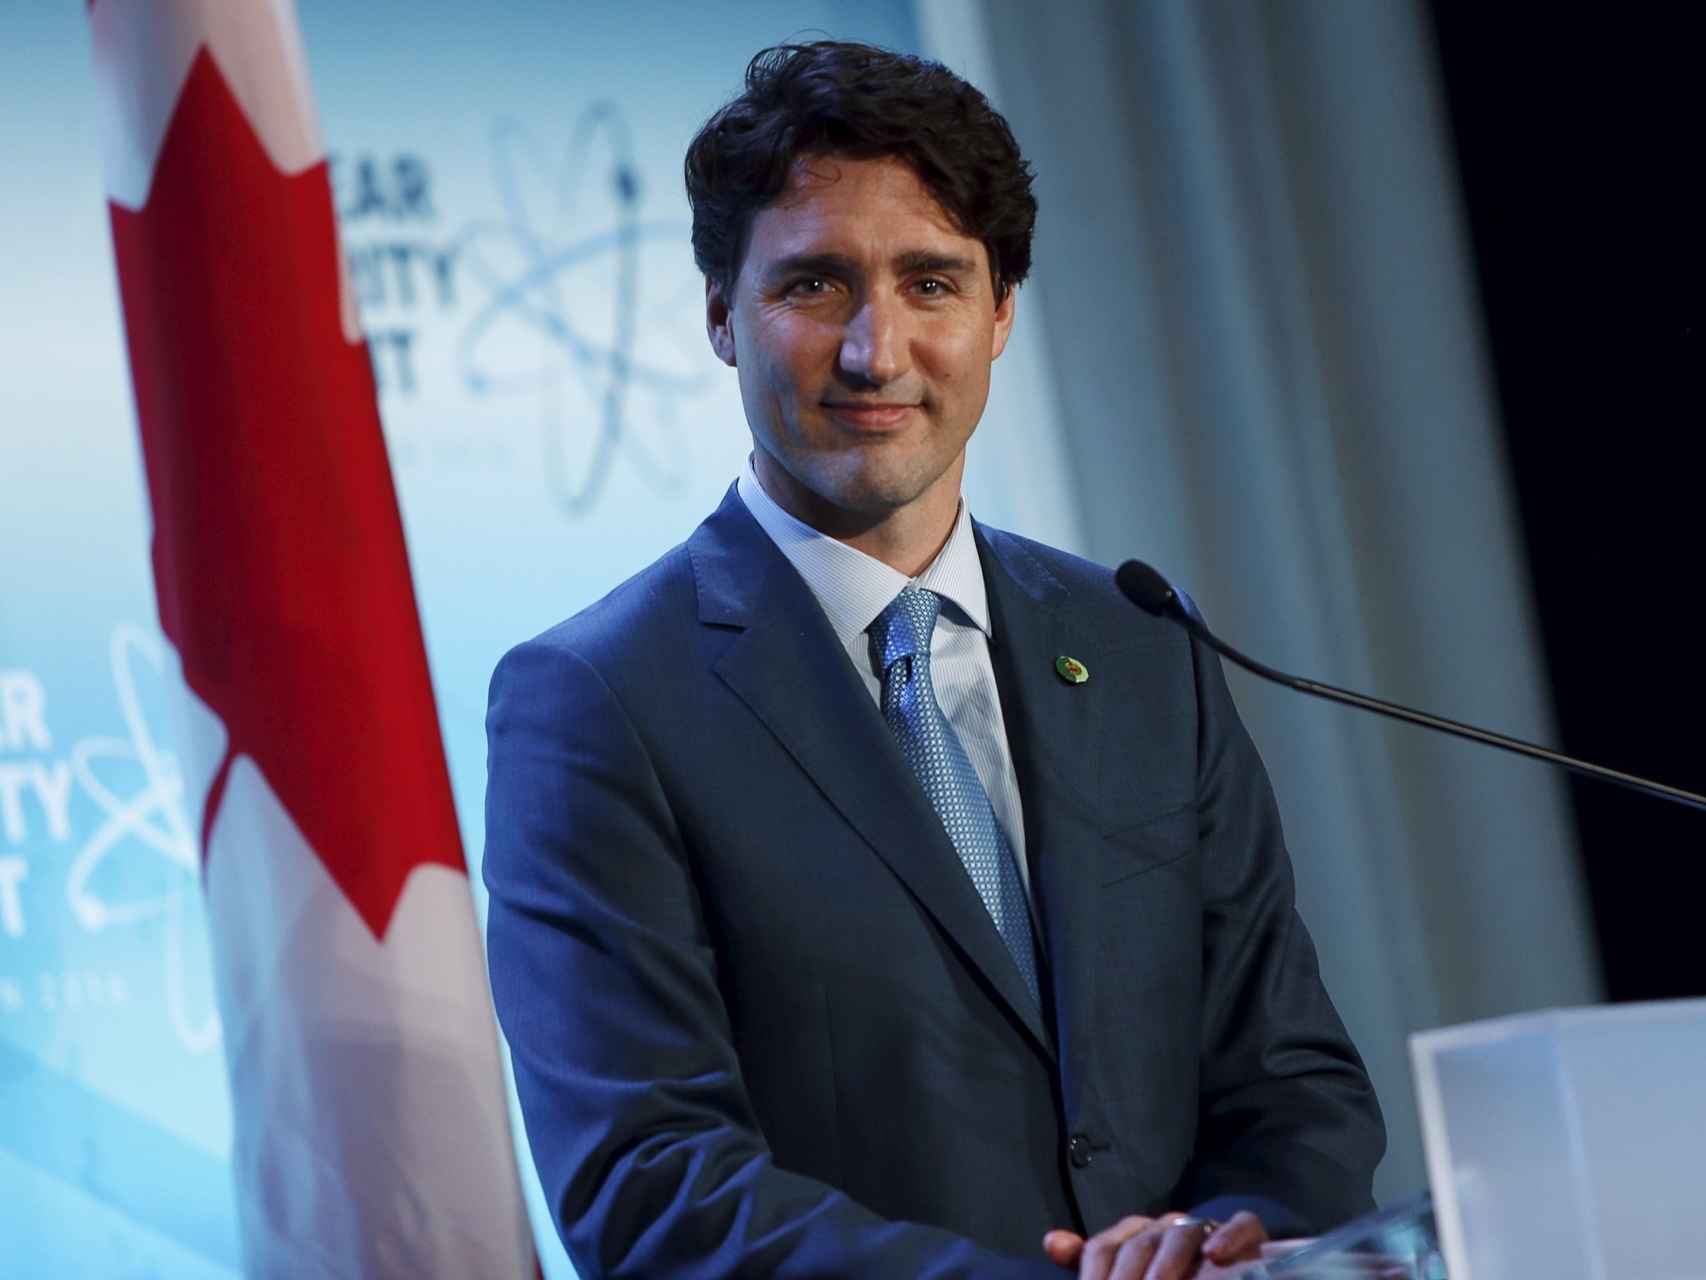 El primer ministro canadiense Justin Trudeau/Jonathan Ernst/Reuters